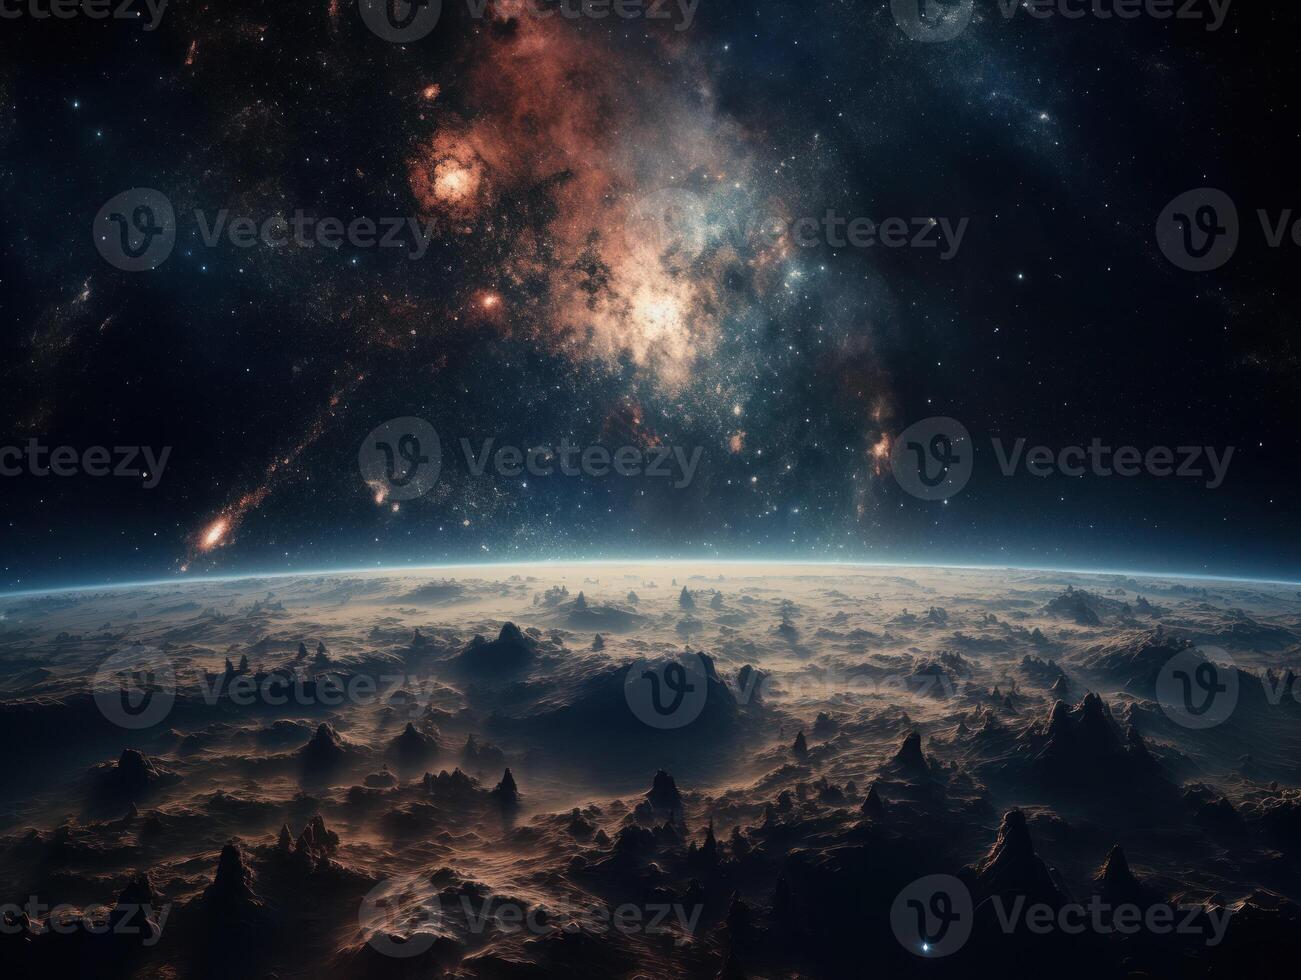 nacht lucht universum gevulde met sterren en nevel heelal abstract kosmos achtergrond. foto